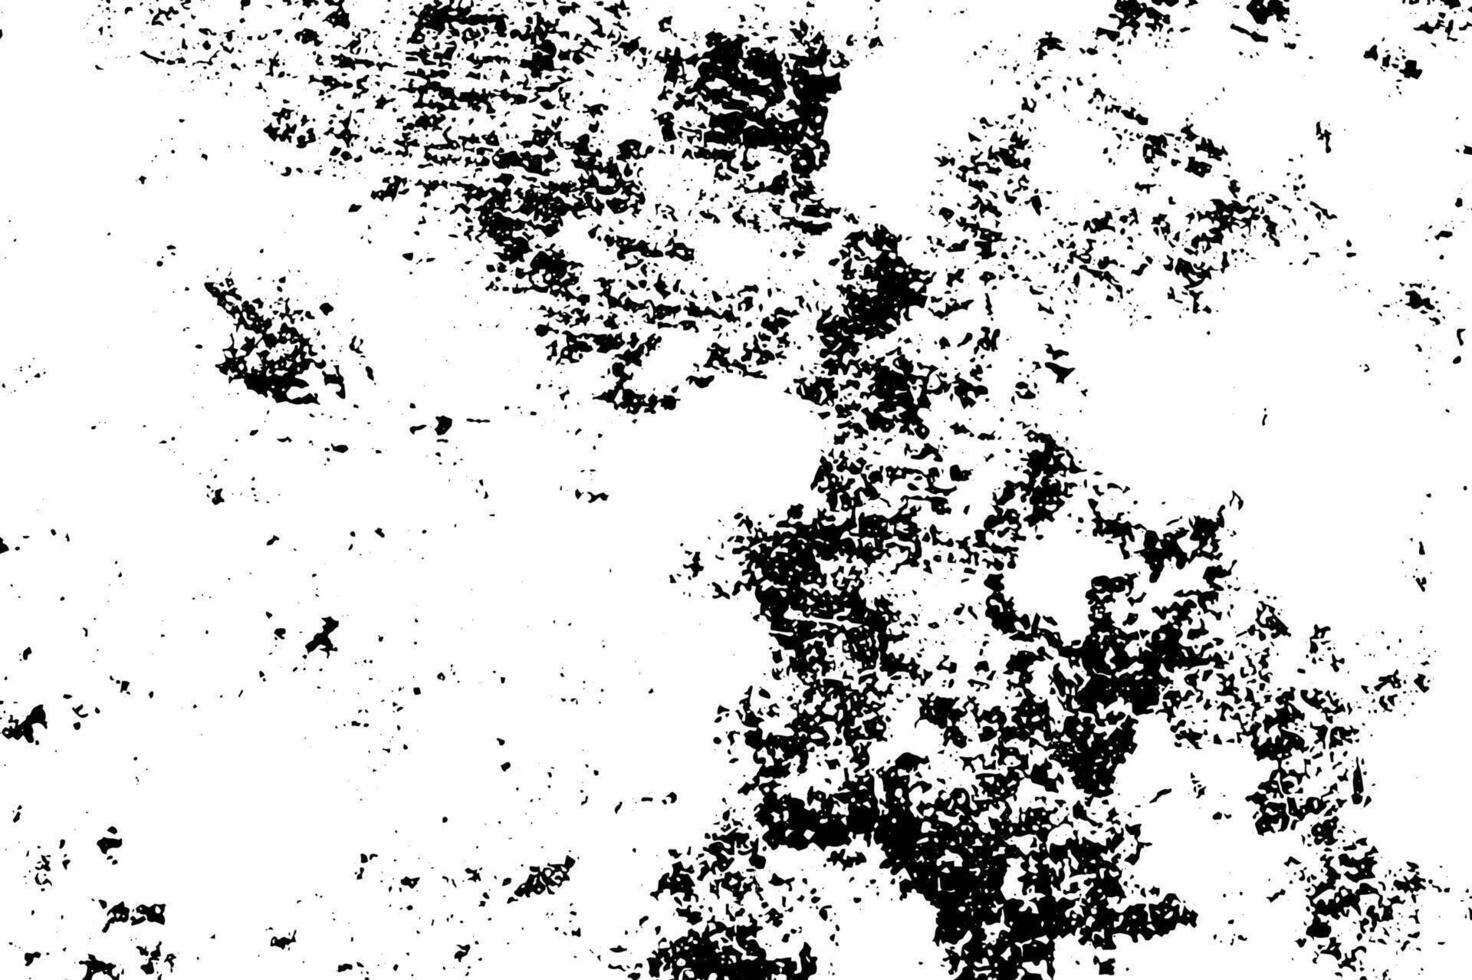 grunge textura. fundo do Preto e branco textura. abstrato monocromático padronizar do pontos, rachaduras, pontos, salgadinhos. vetor